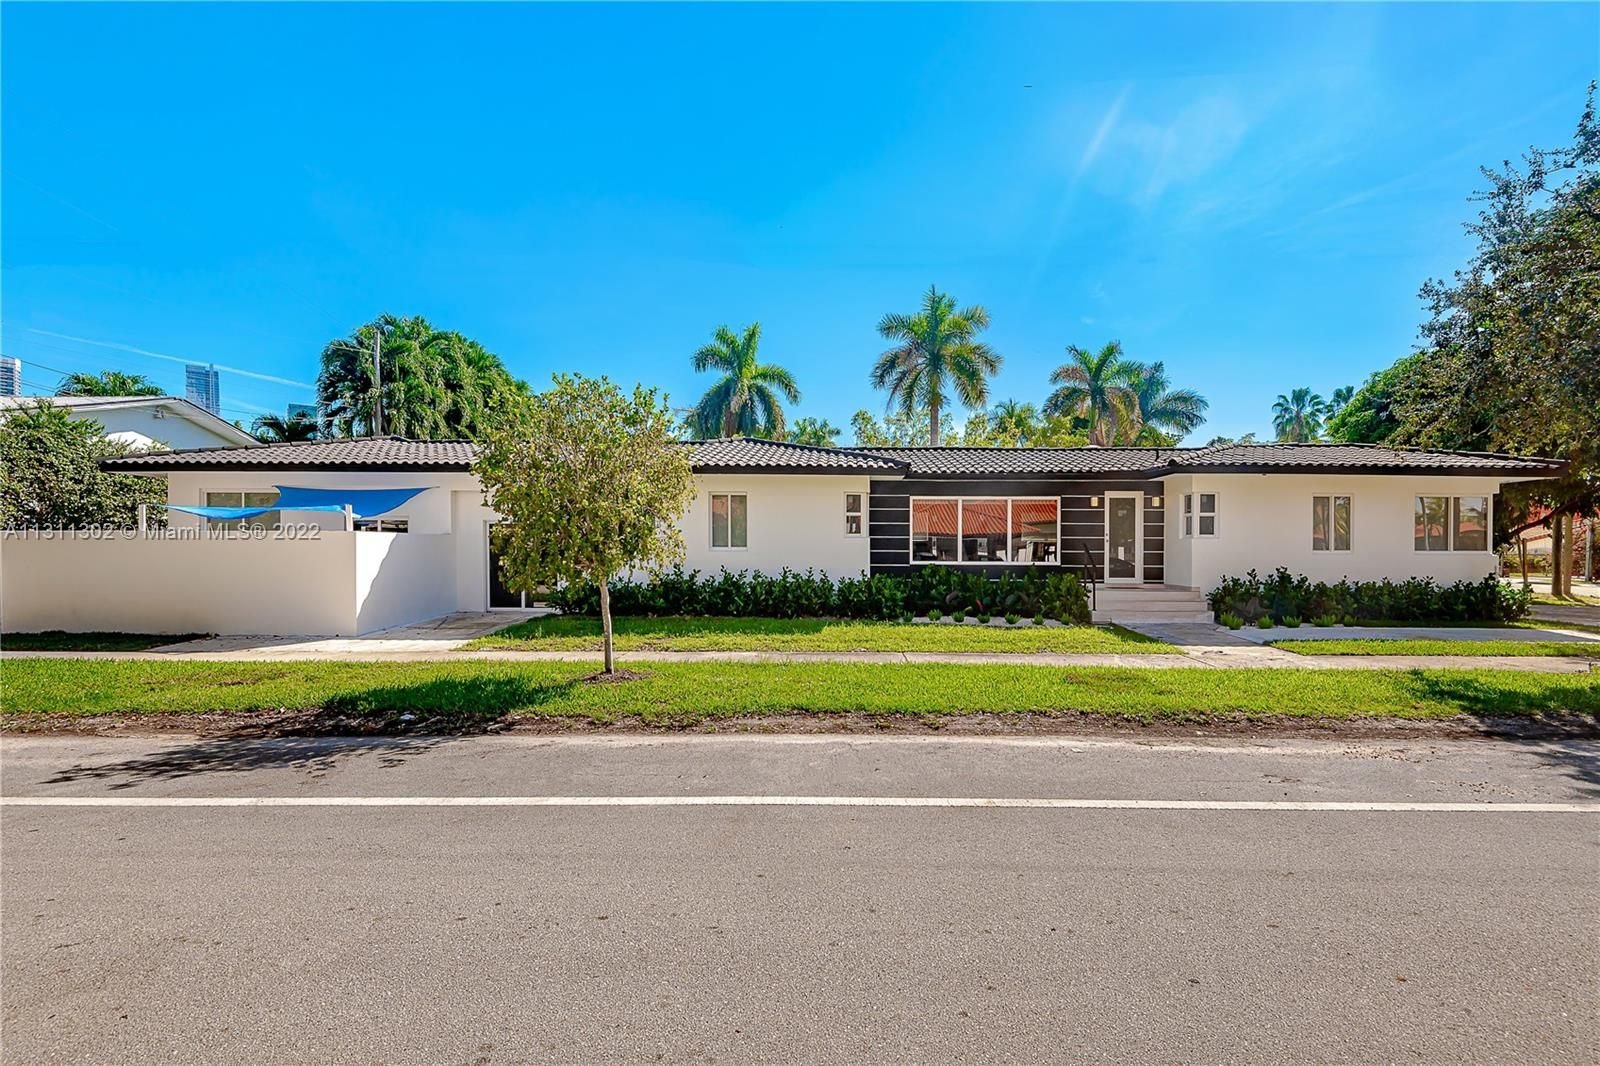 Real estate property located at 1955 5th Ave, Miami-Dade County, Miami, FL